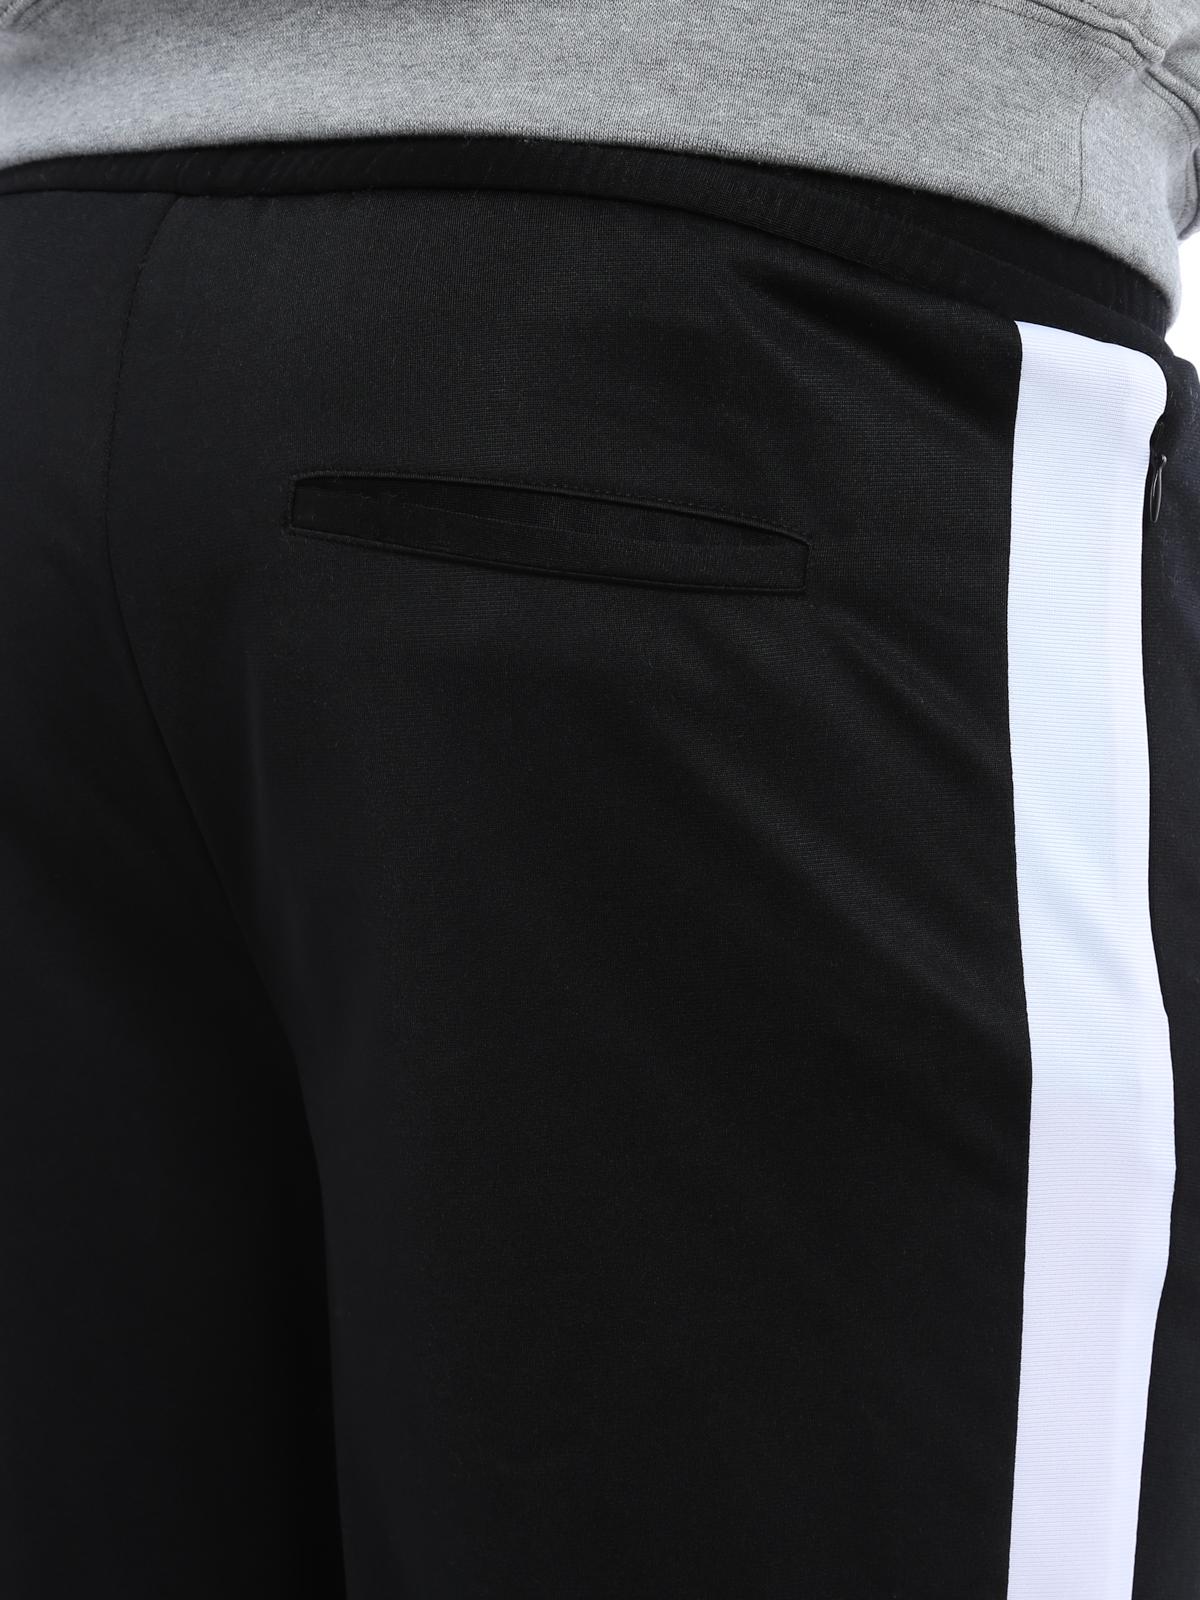 MSGM Diadora Msgm Trousers in Black for Men - Lyst